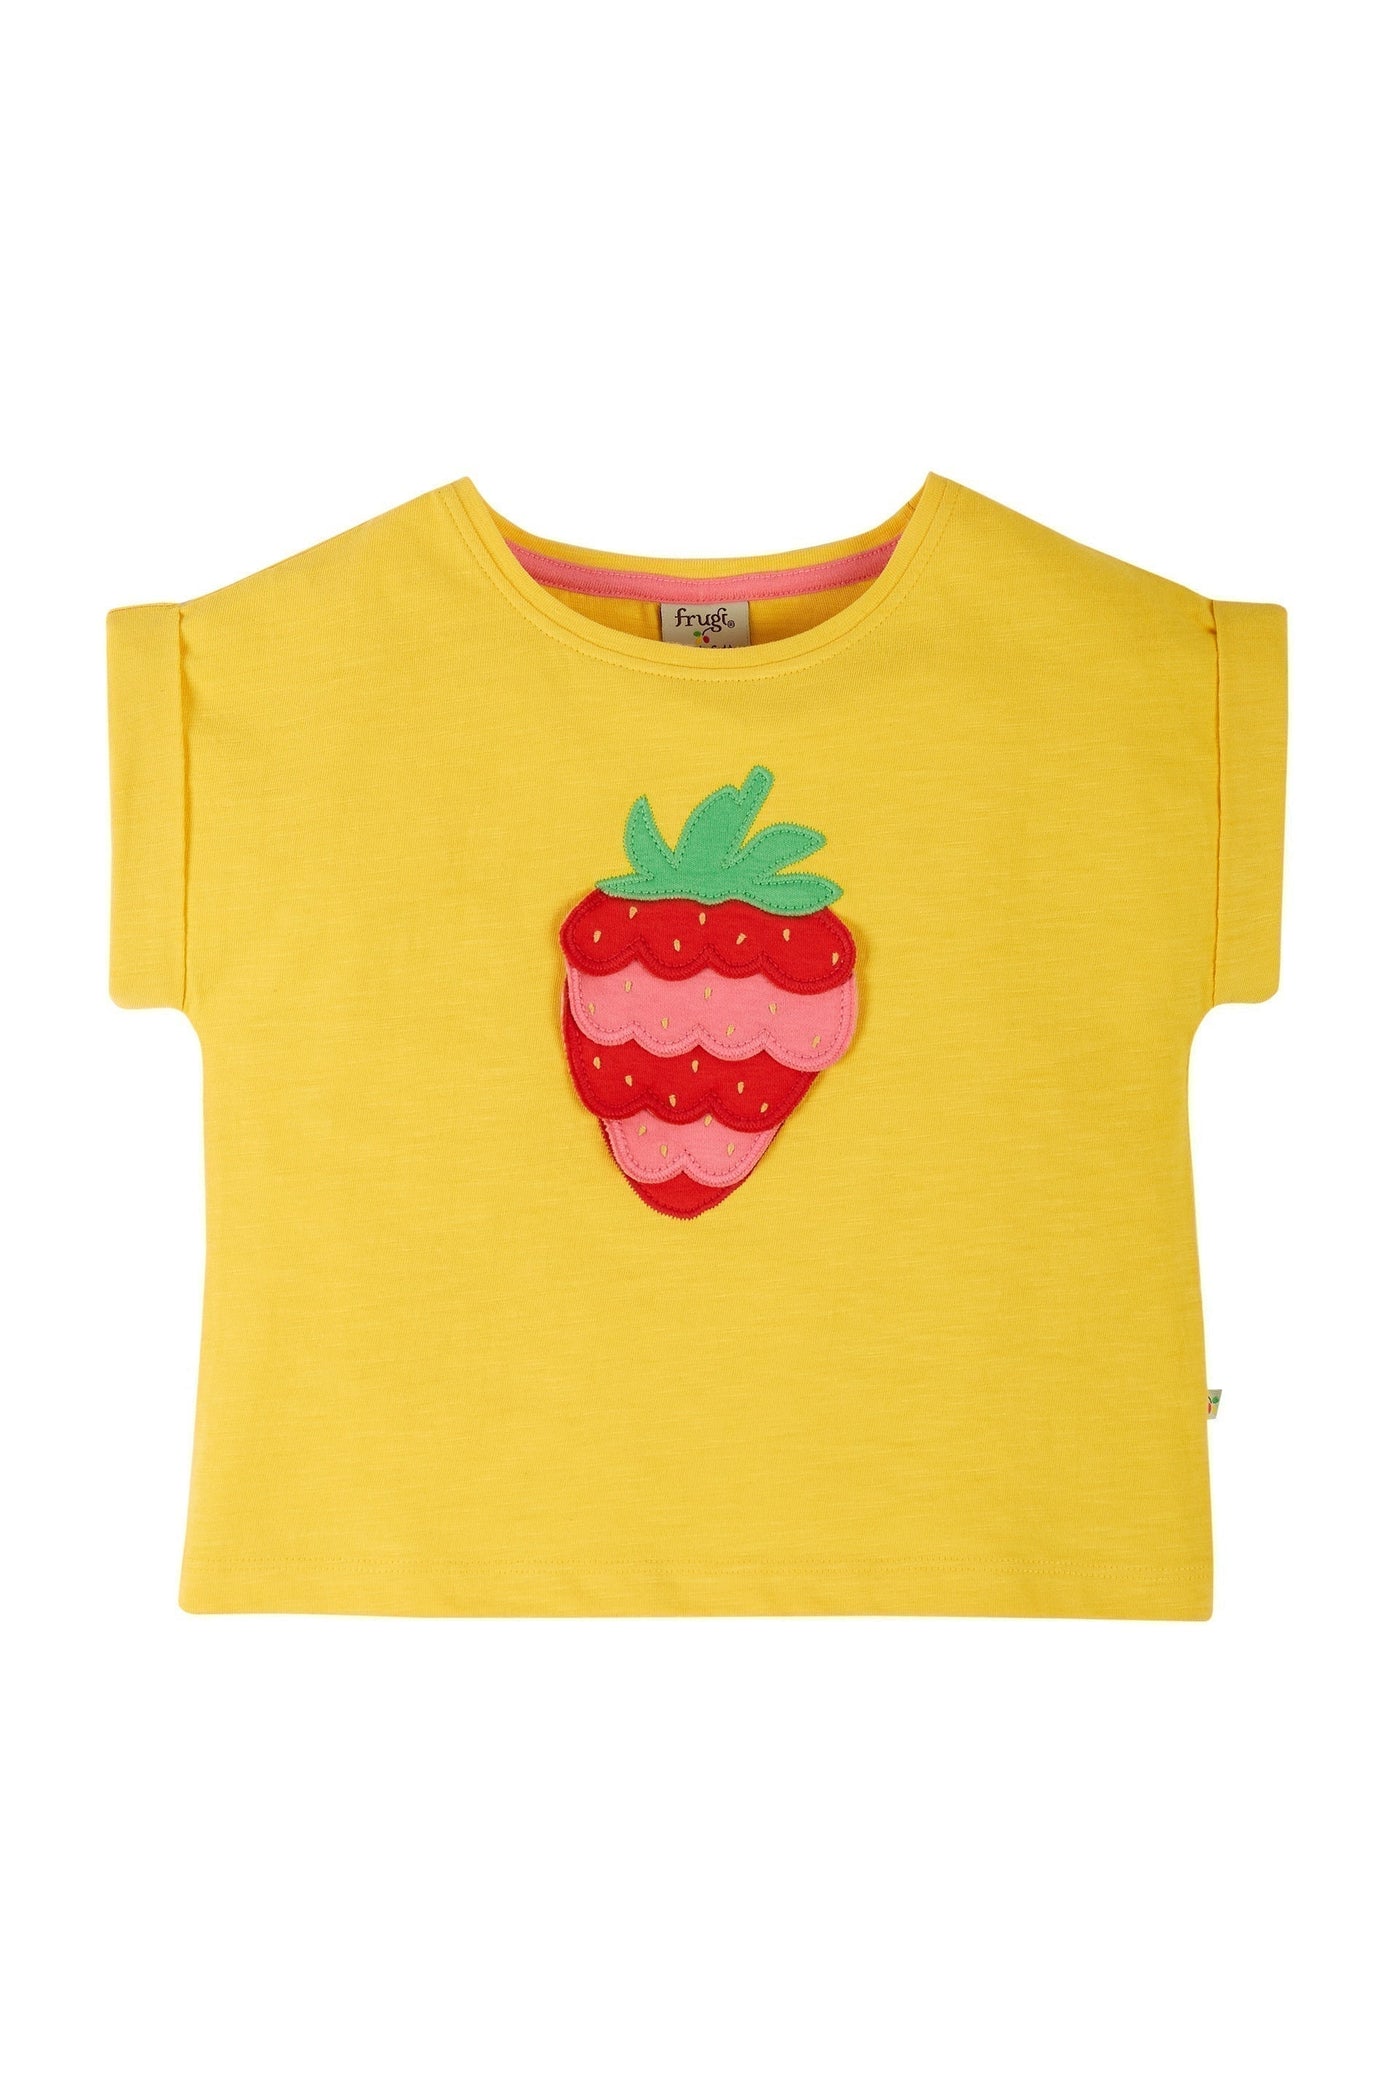 Frugi Sophia Slub T-Shirt in Yellow, Strawberry-Kids-Ohh! By Gum - Shop Sustainable